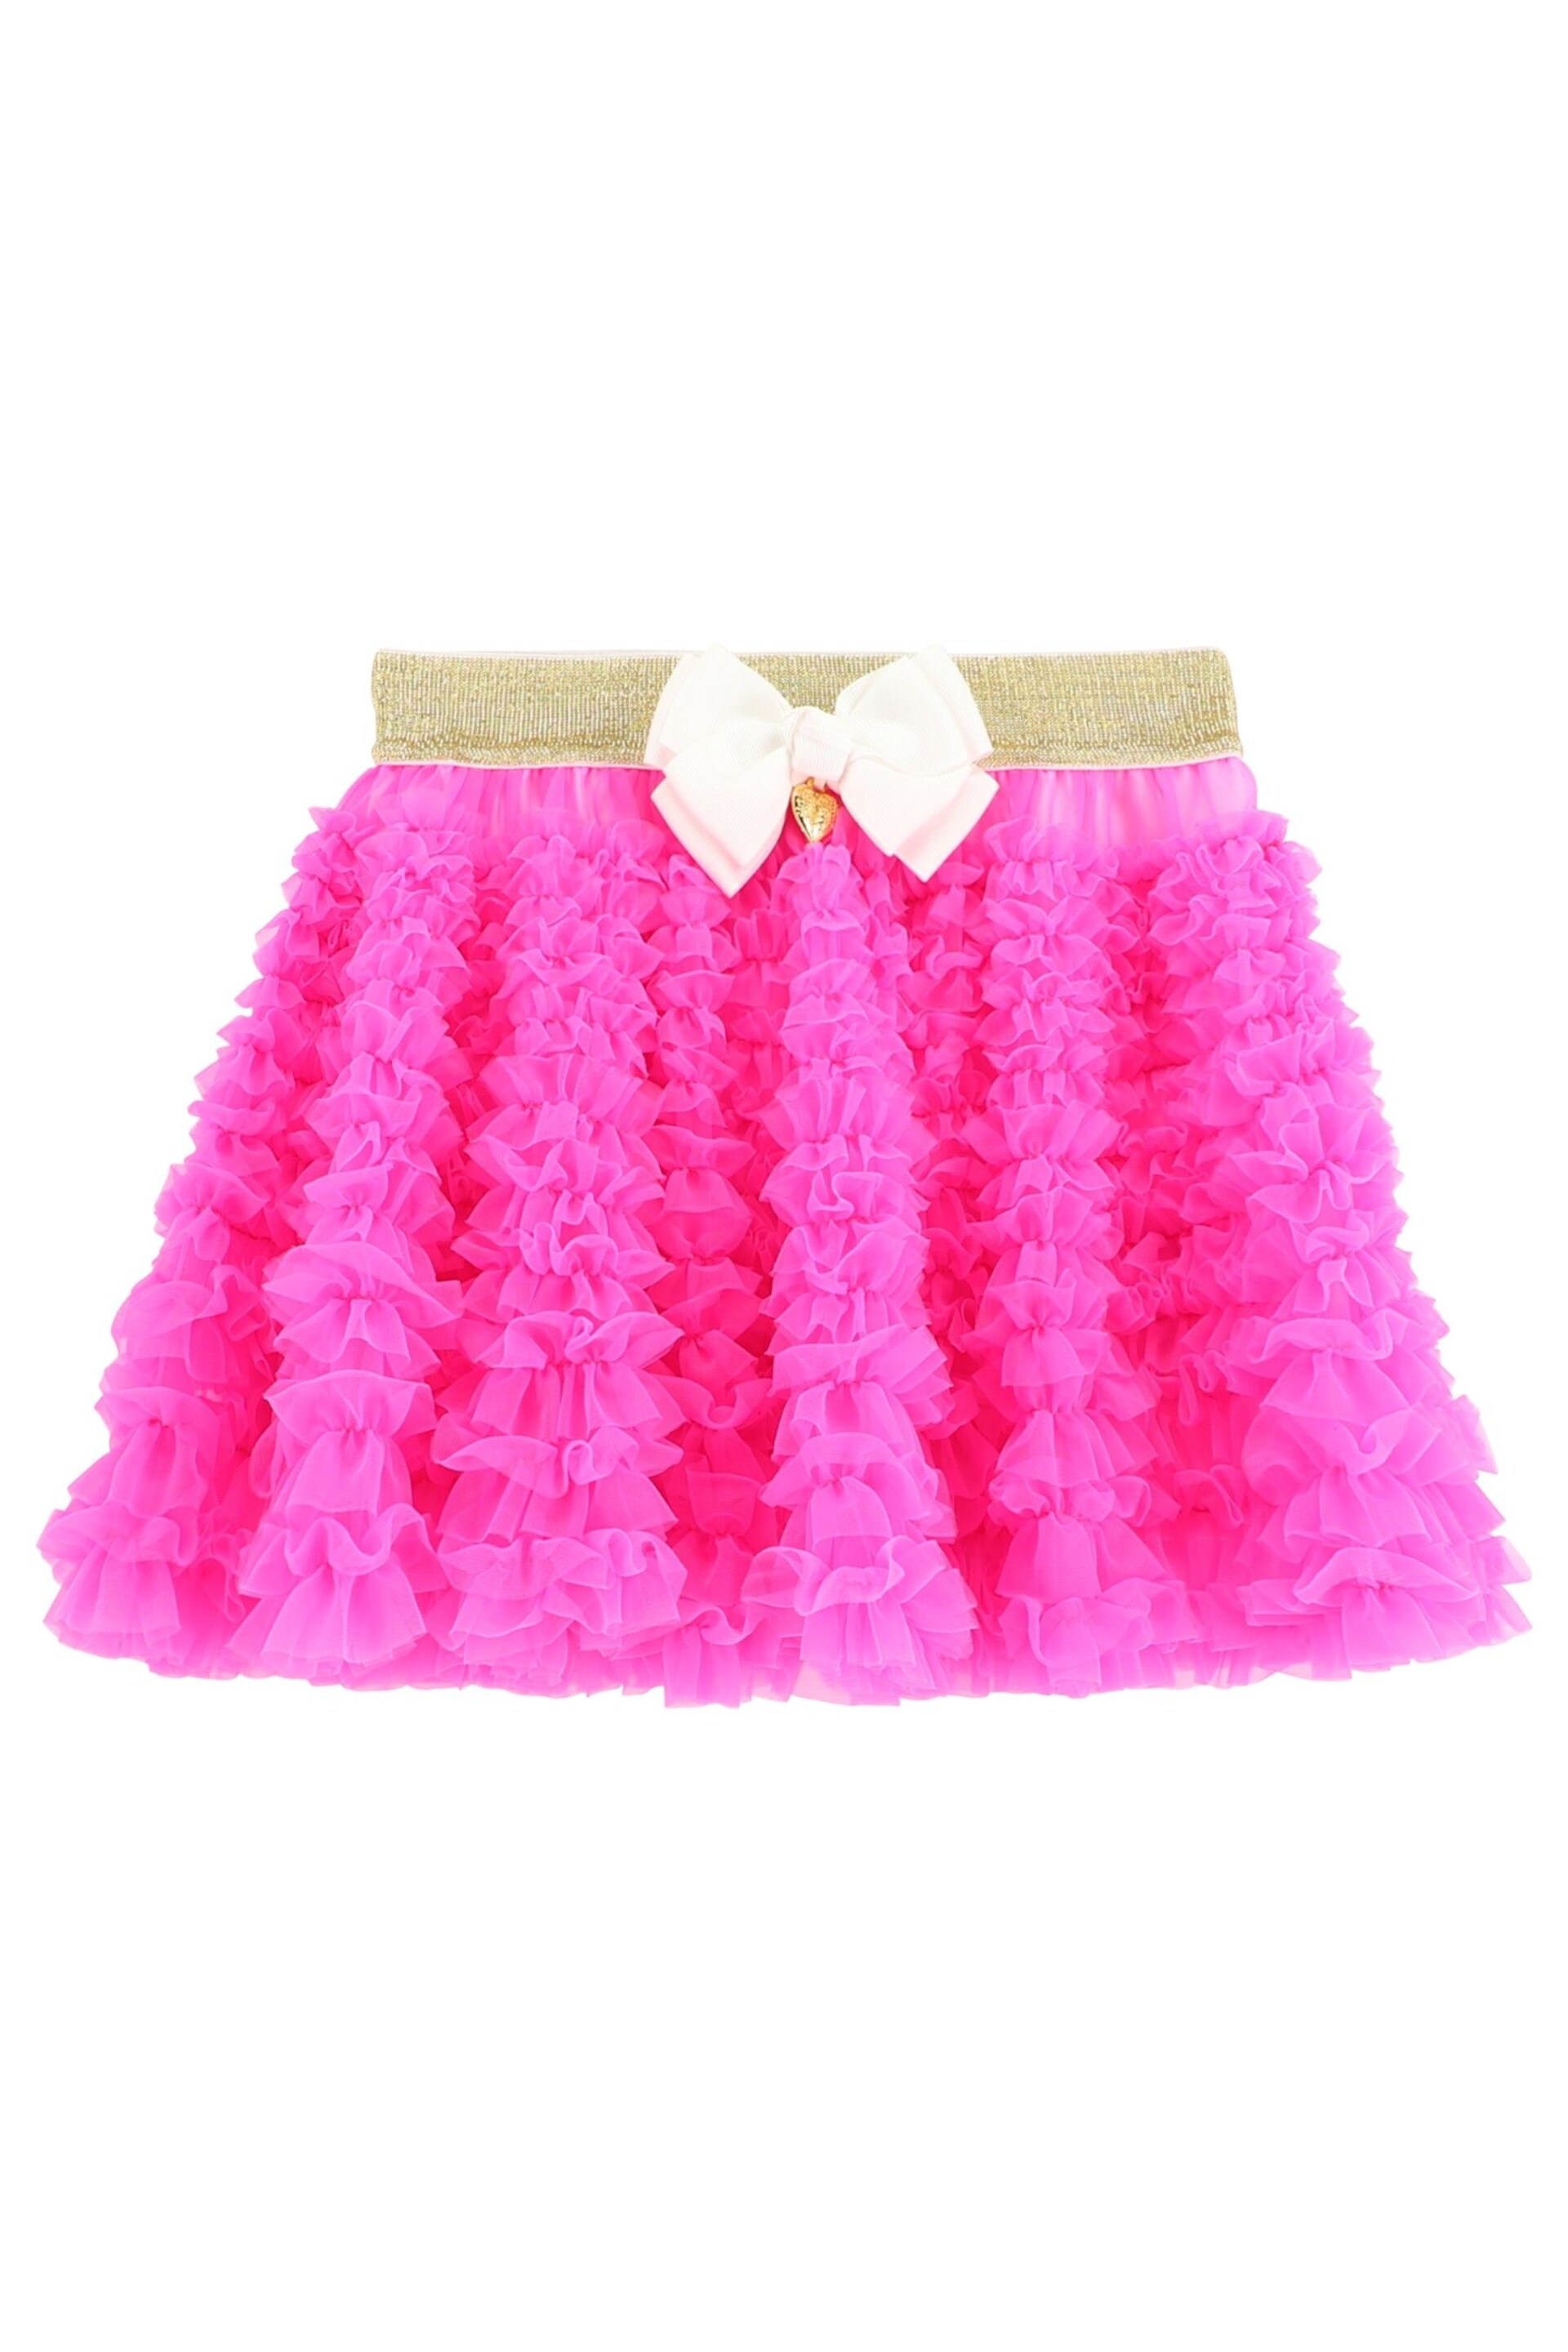 Angels Face Pink Ballroom Skirt - Image 2 of 3